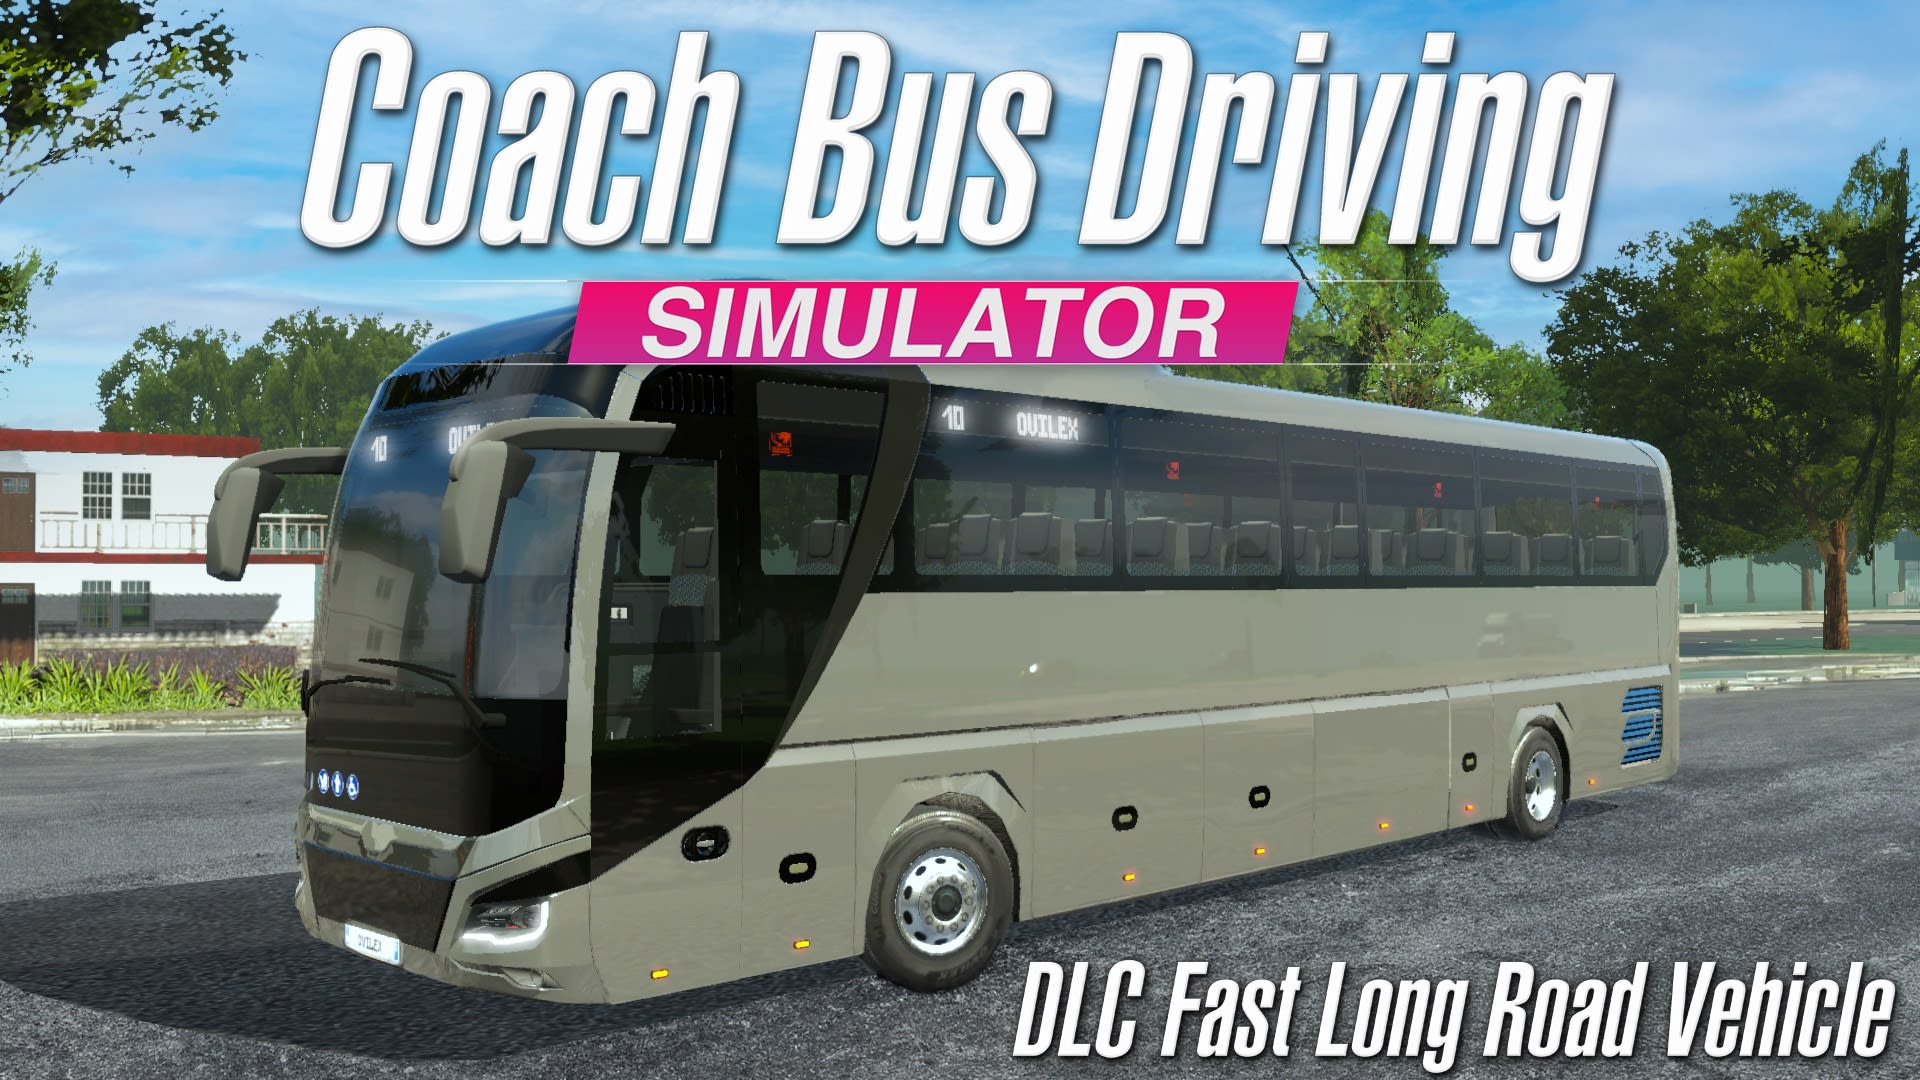 Coach Bus Driving Simulator - DLC Fast Long Road Vehicle